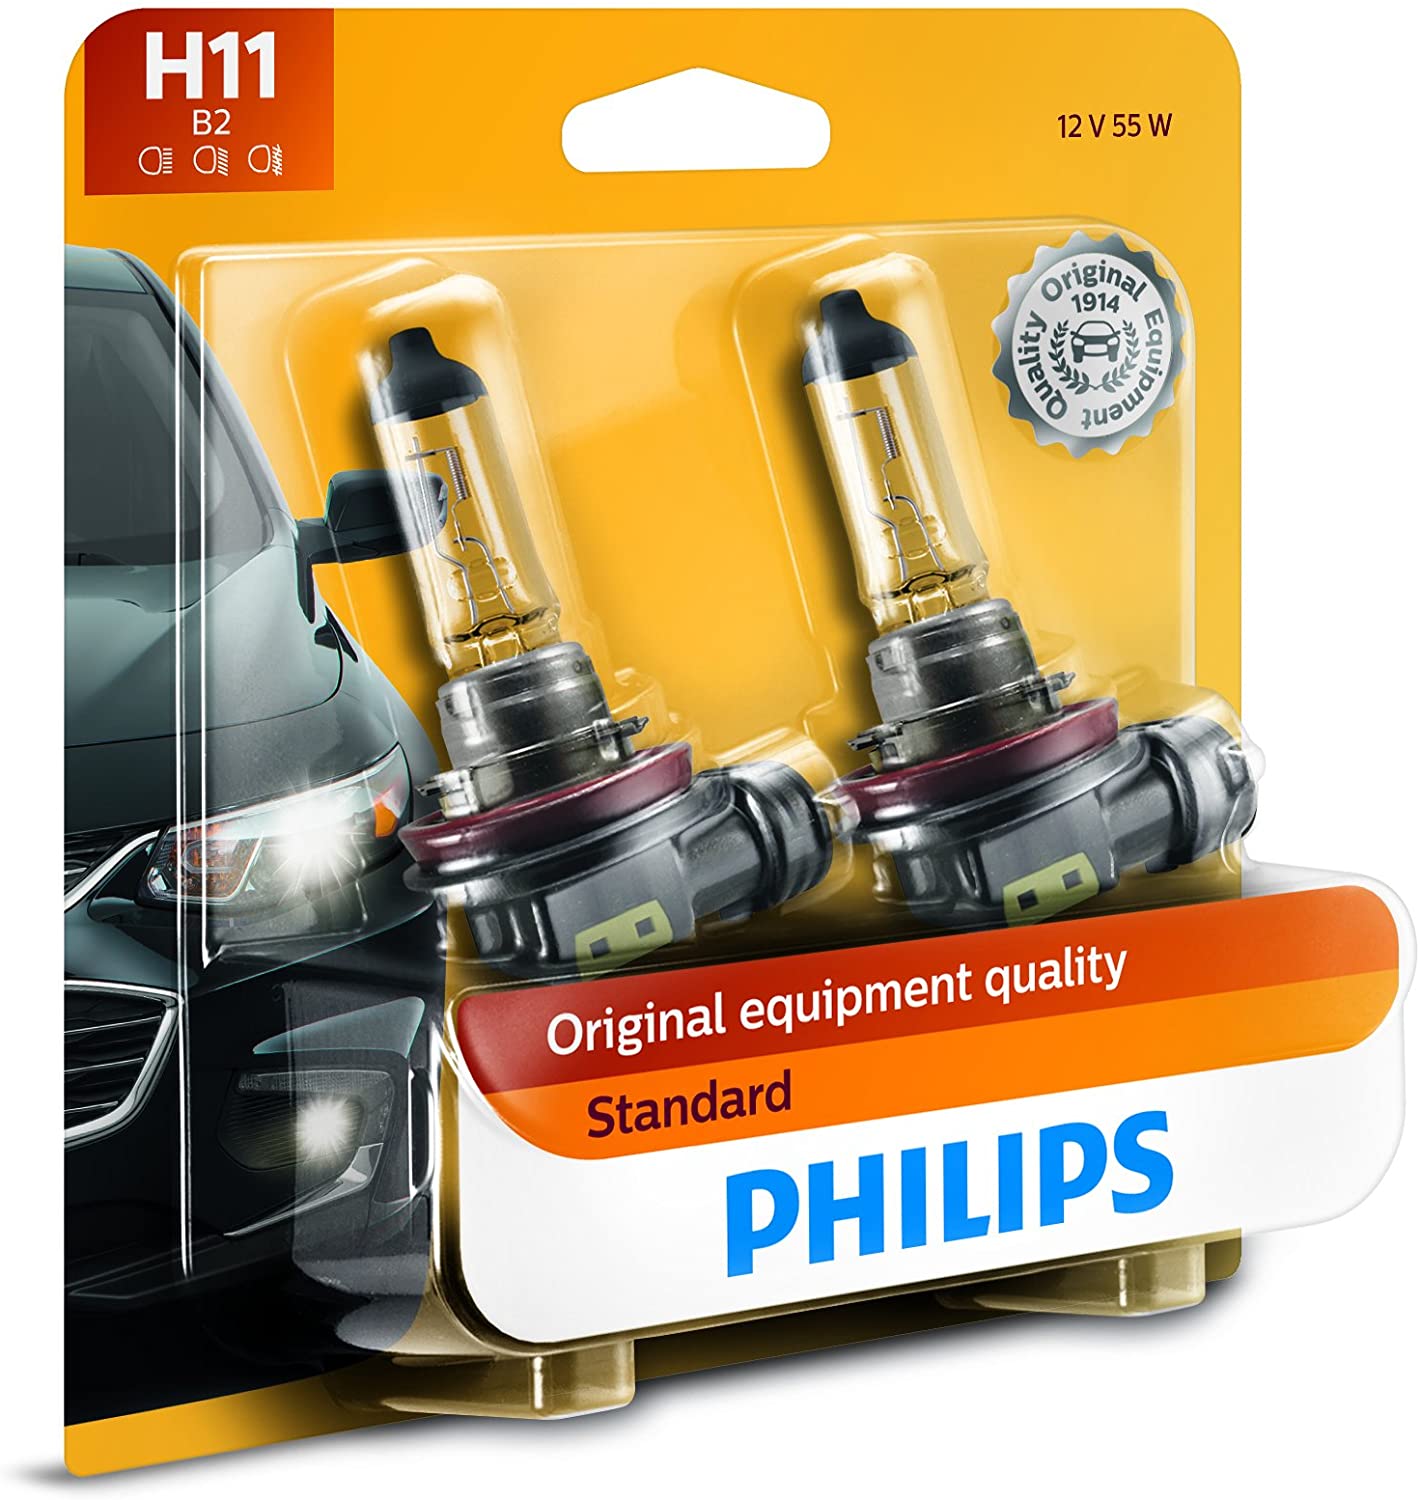 PHILIPS H11 Standard Halogen Replacement Headlight Bulb - 2 Pack $18